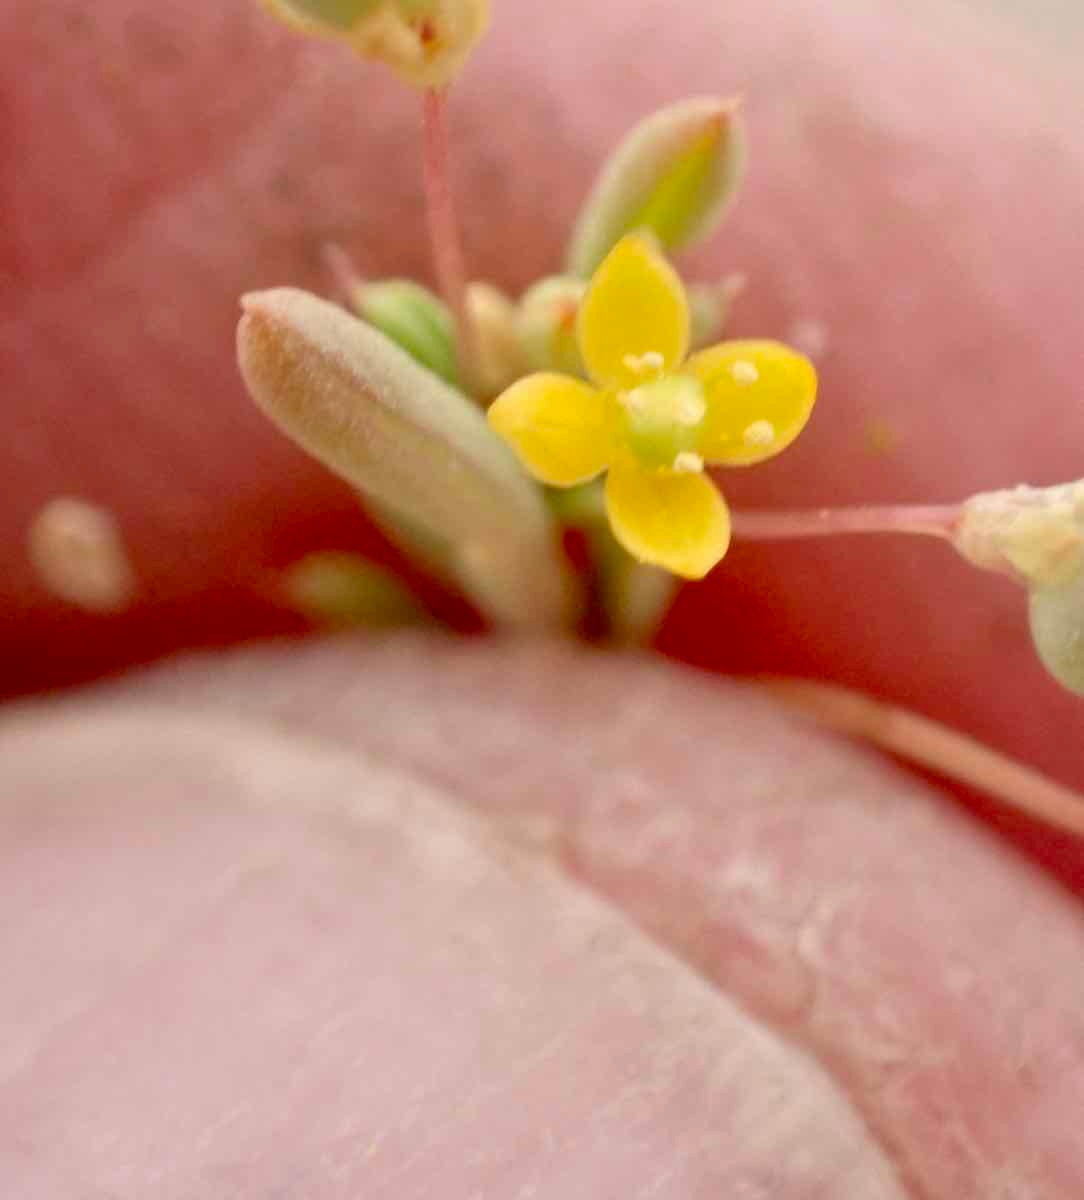 Cleomella parviflora